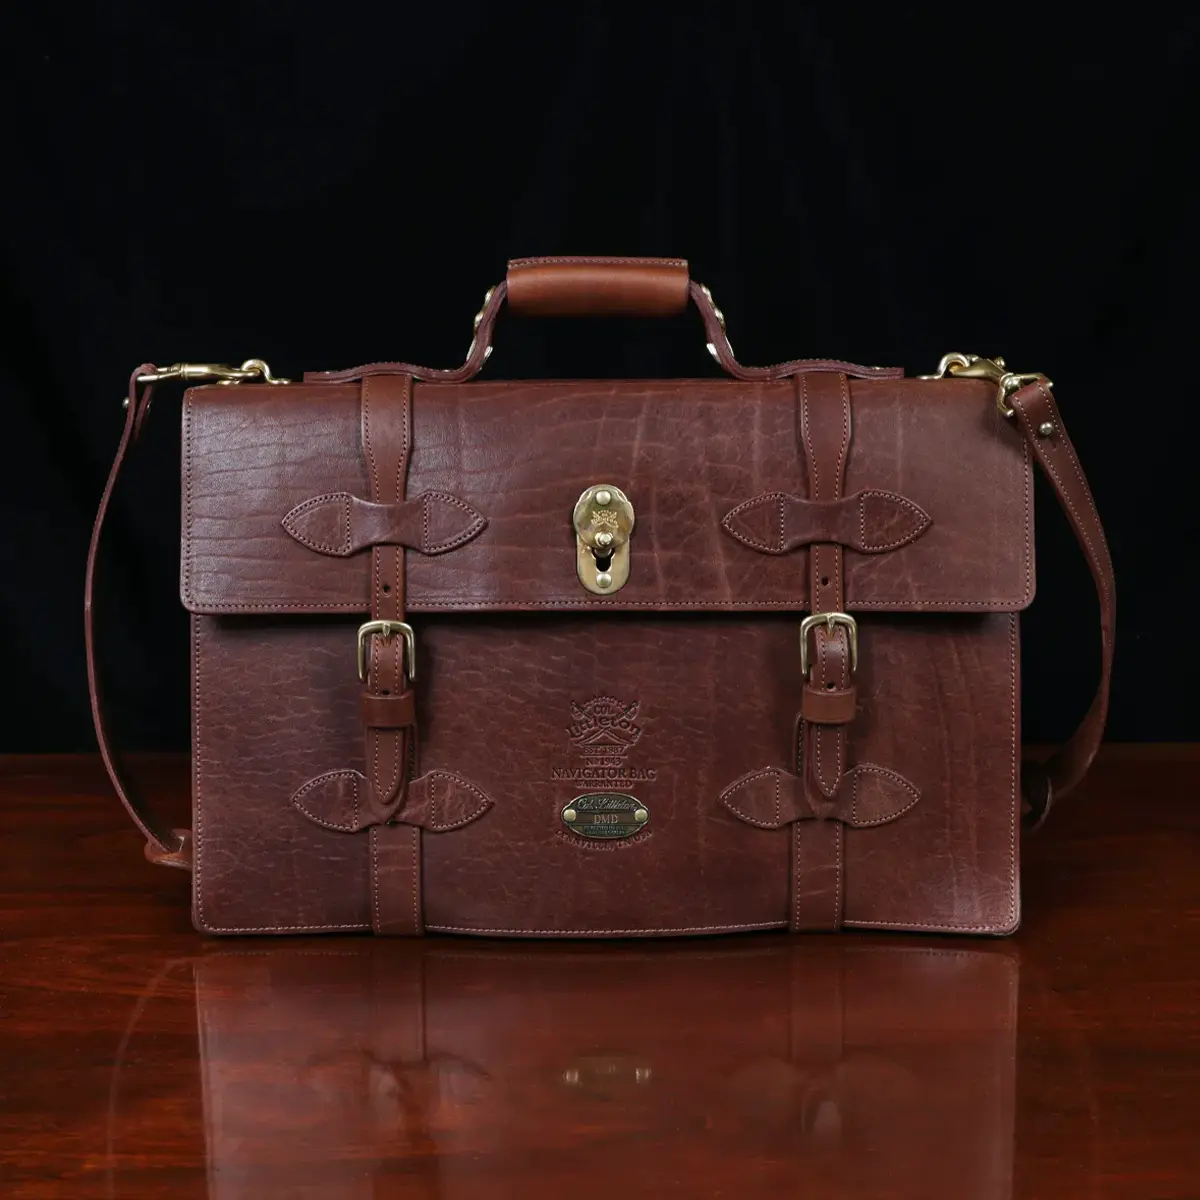 Leather Navigator Briefcase No. 1943, USA Made, Full-Grain